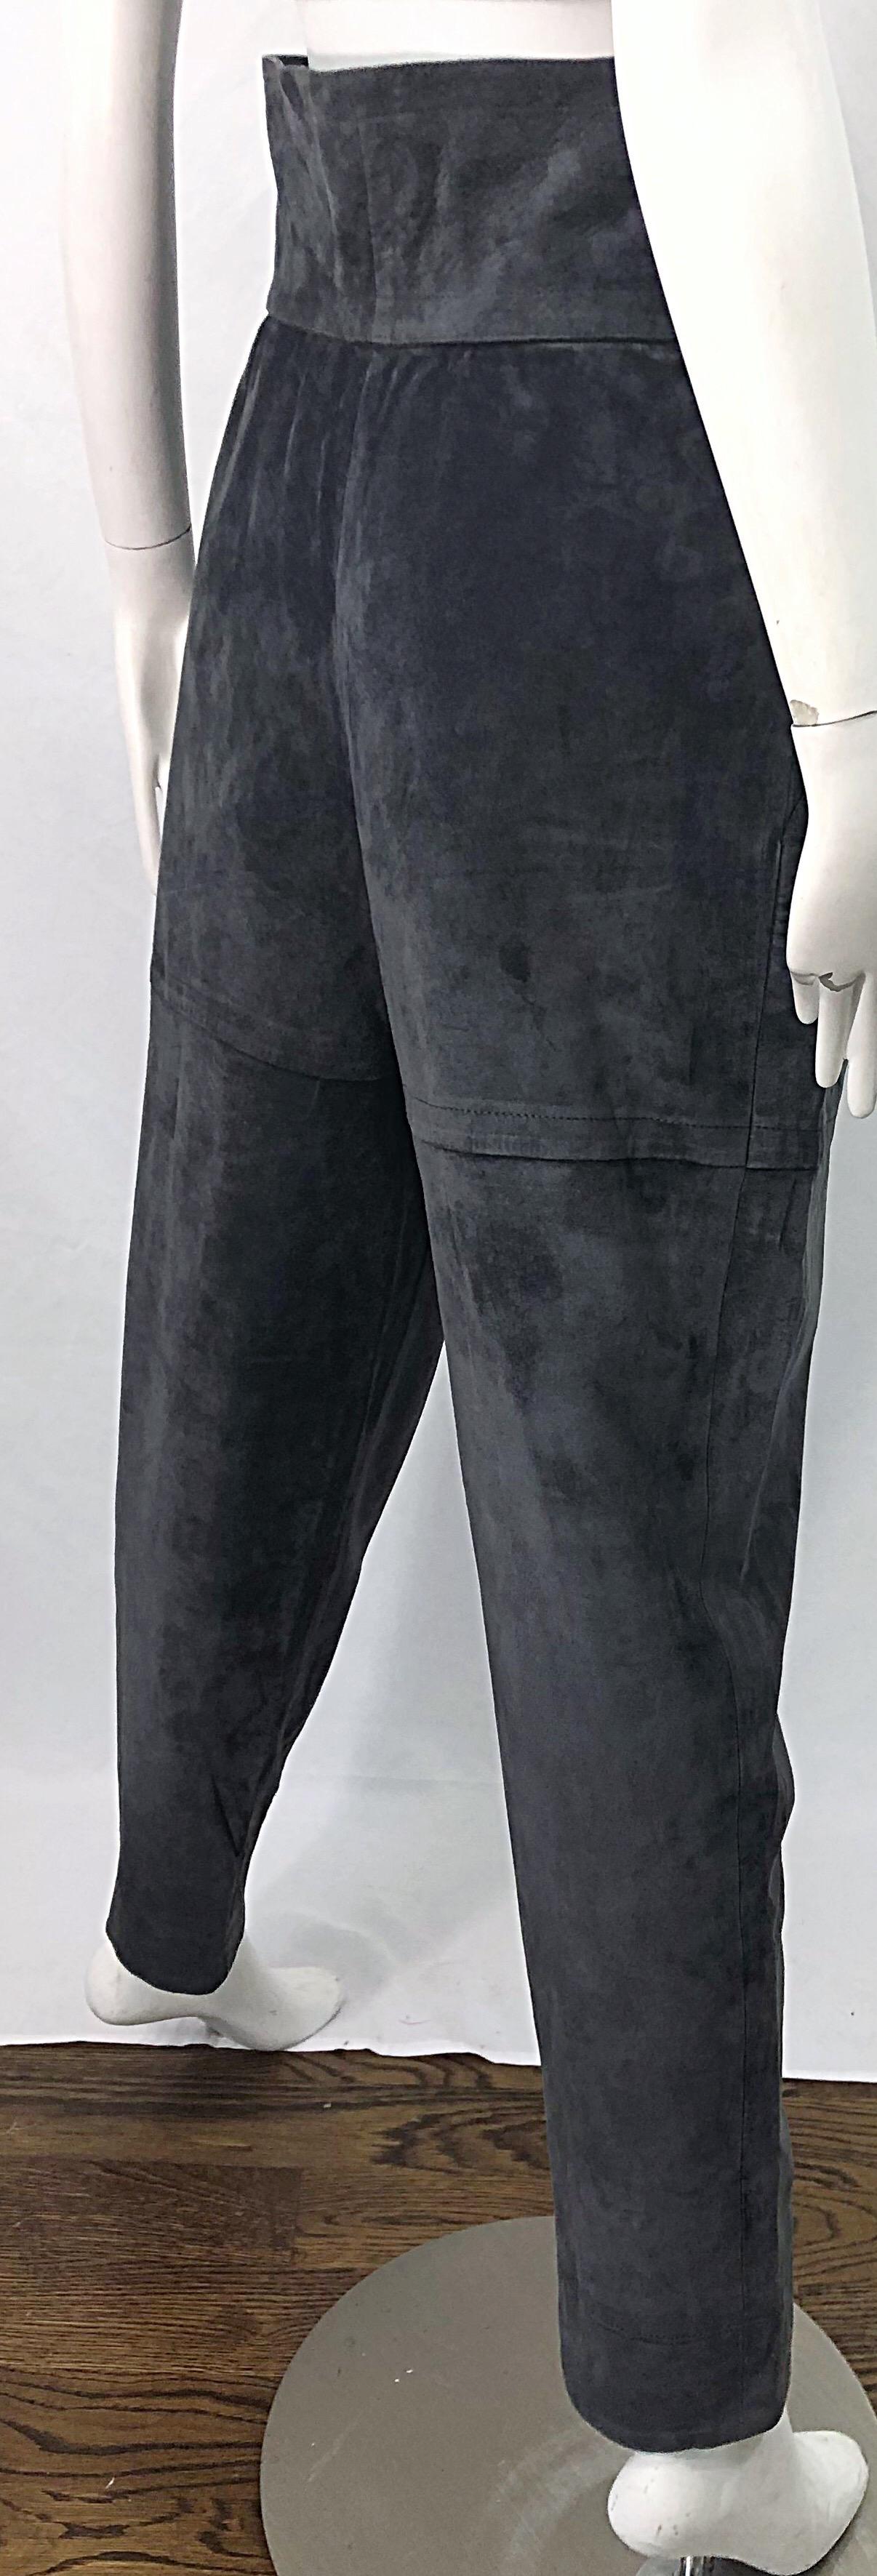 Vintage Yves Saint Laurent YSL 1980s Grey Suede Leather High Waisted Harem Pants For Sale 2